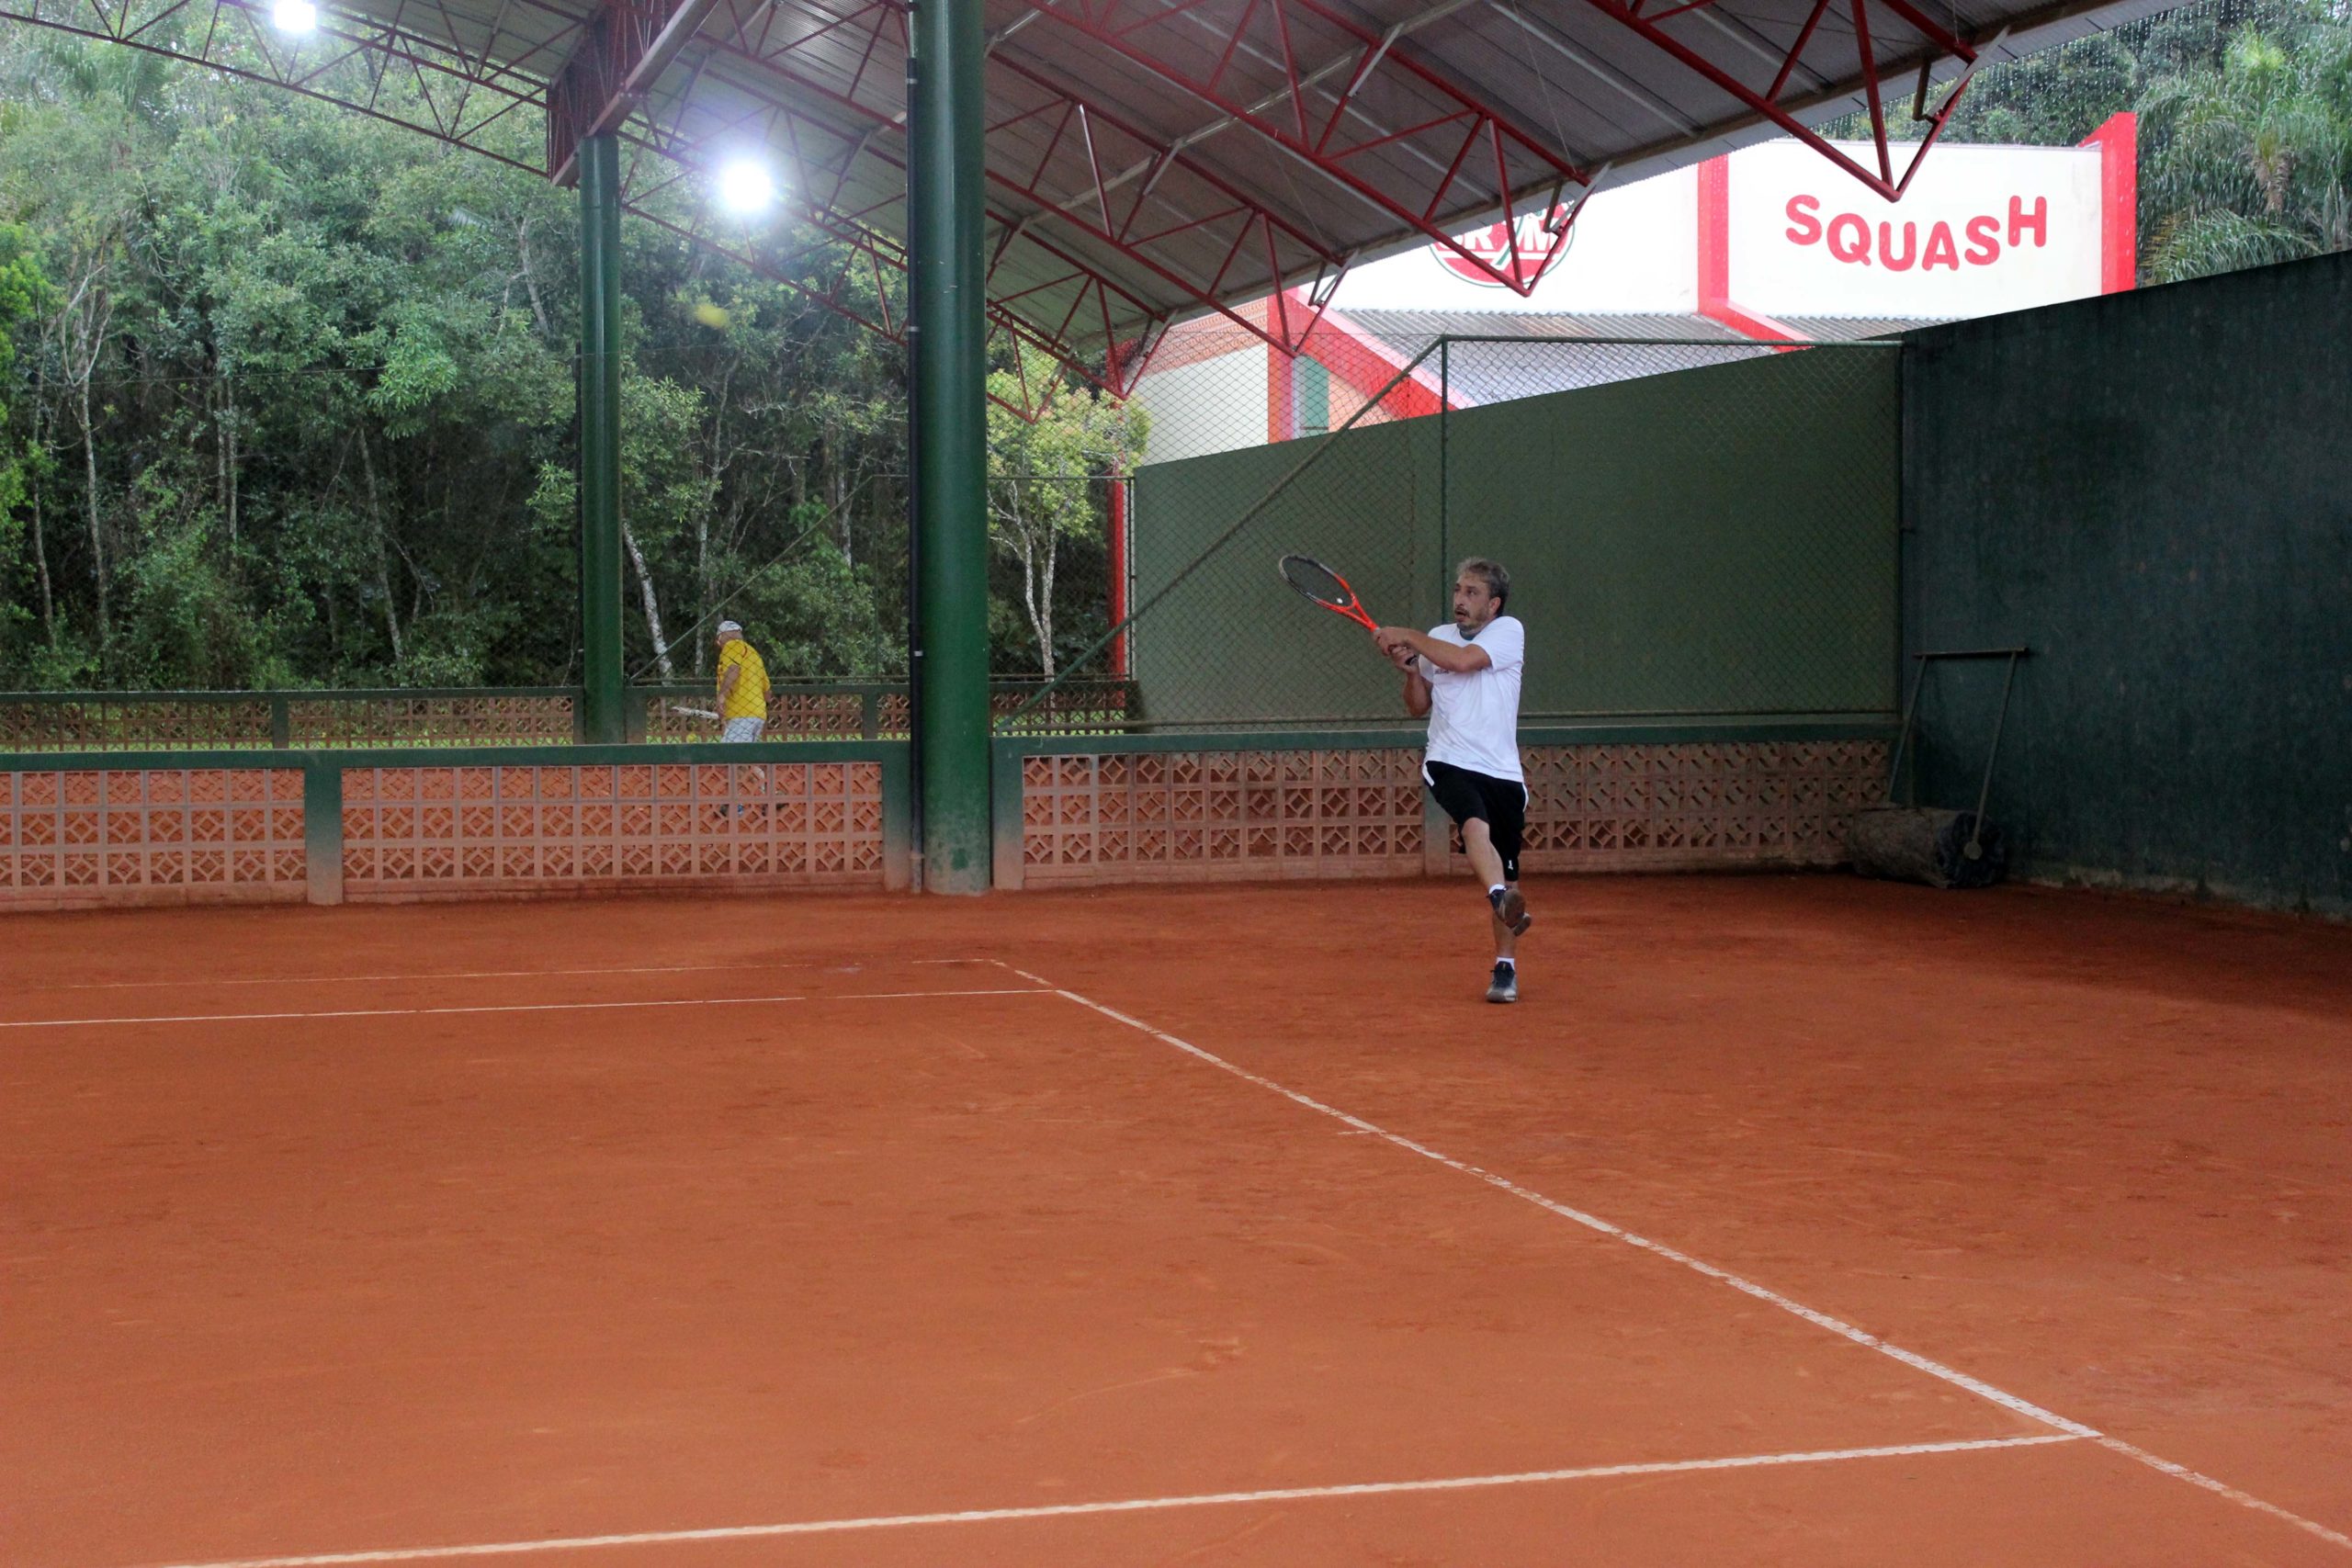 Winning Tennis, ACADEMIA DE TENIS - WINNING TENNIS - Tairon…